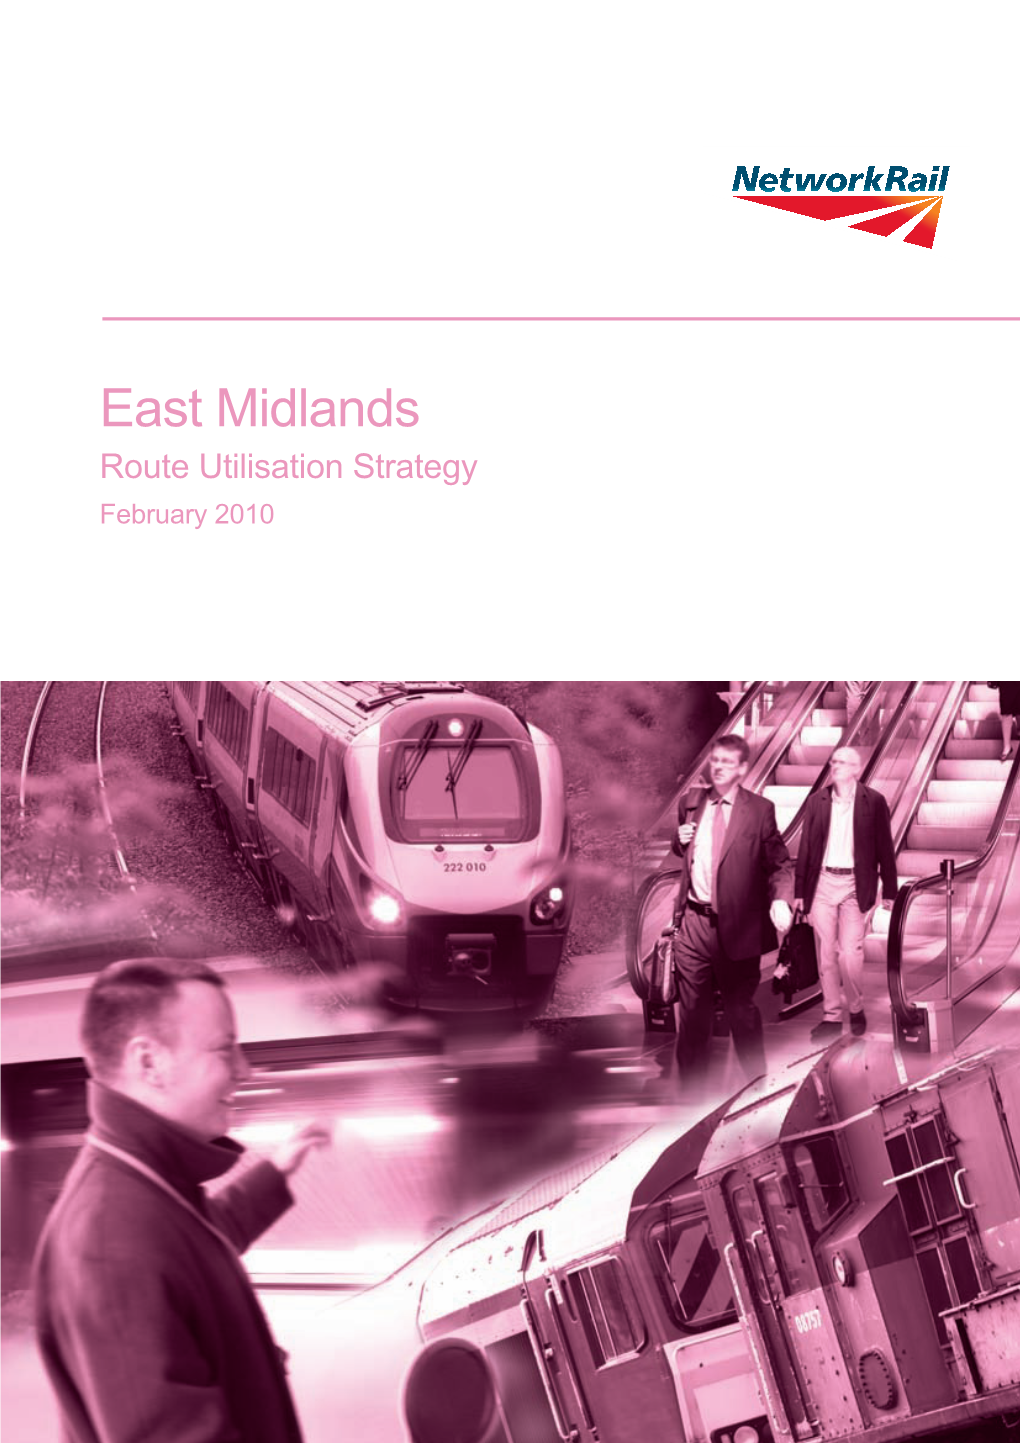 East Midlands Route Utilisation Strategy February 2010